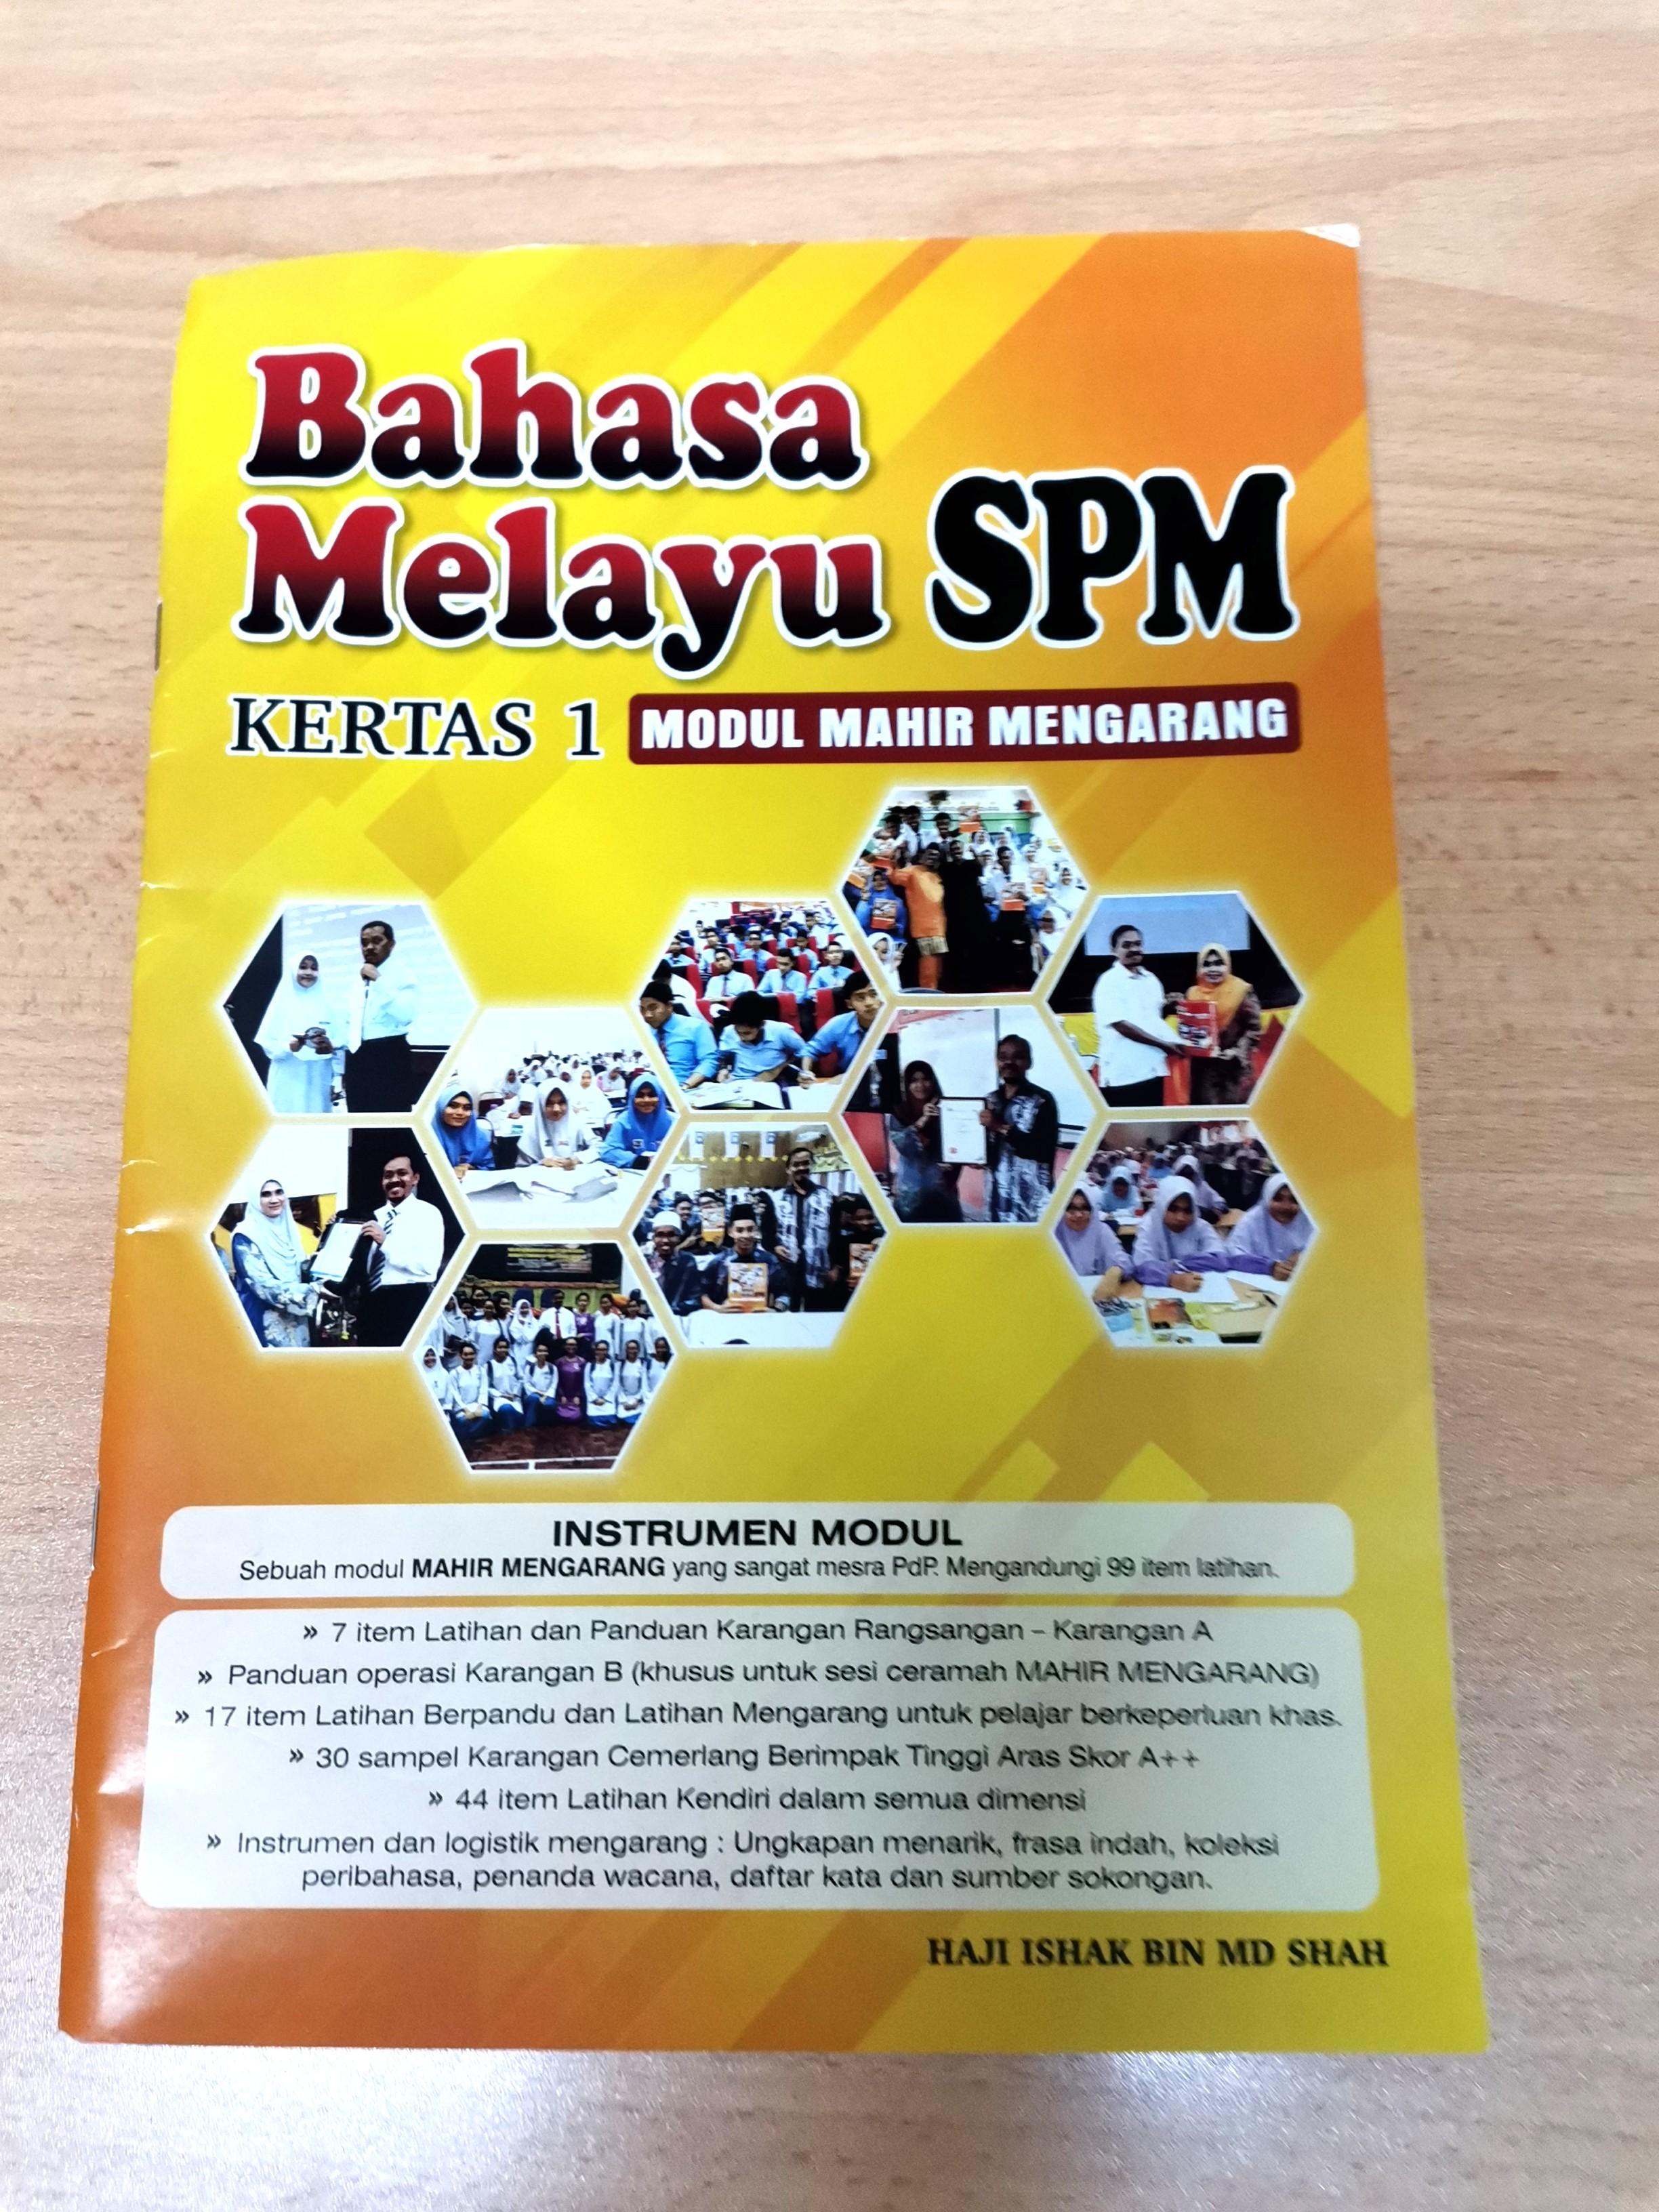 Bahasa Melayu Spm Kertas 1 Modul Mahir Mengarang Books Stationery Books On Carousell